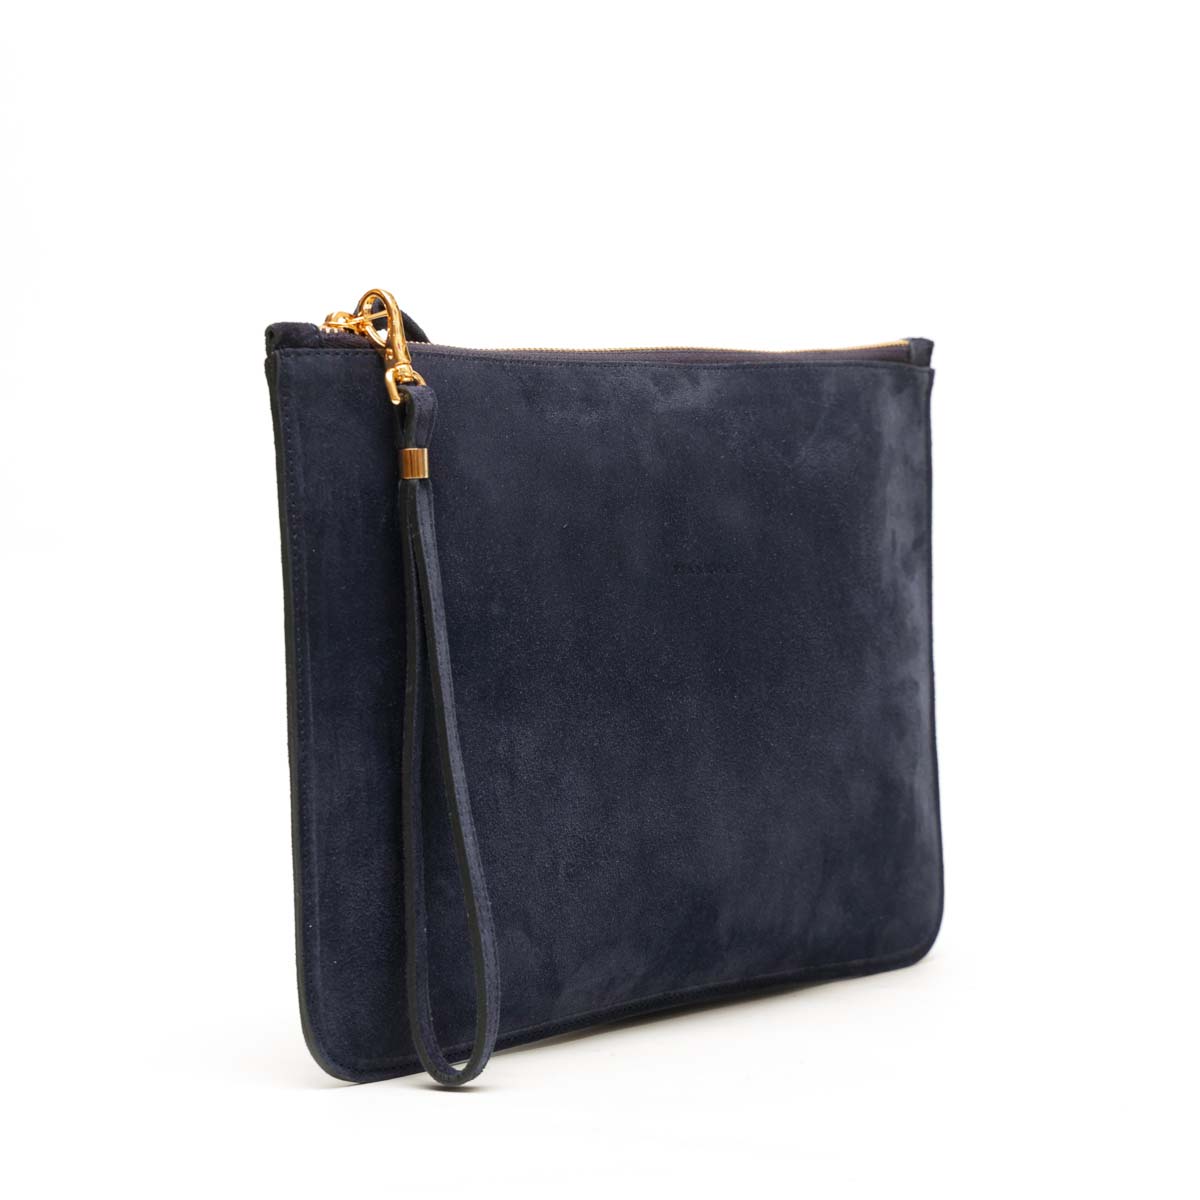 Rose bag - handbag - blue color - made in Italy – PIANIGIANI